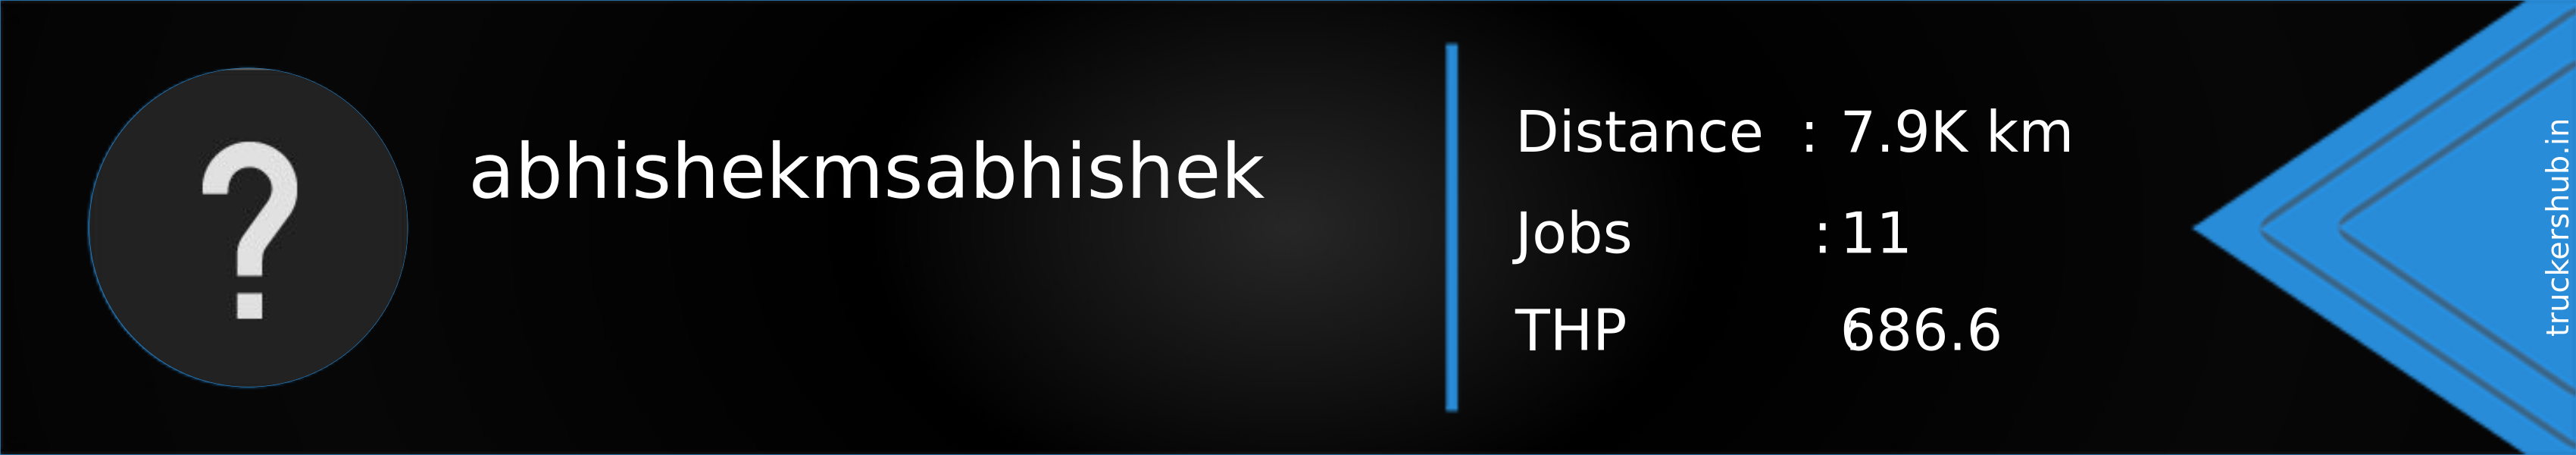 abhishekmsabhishek Banner